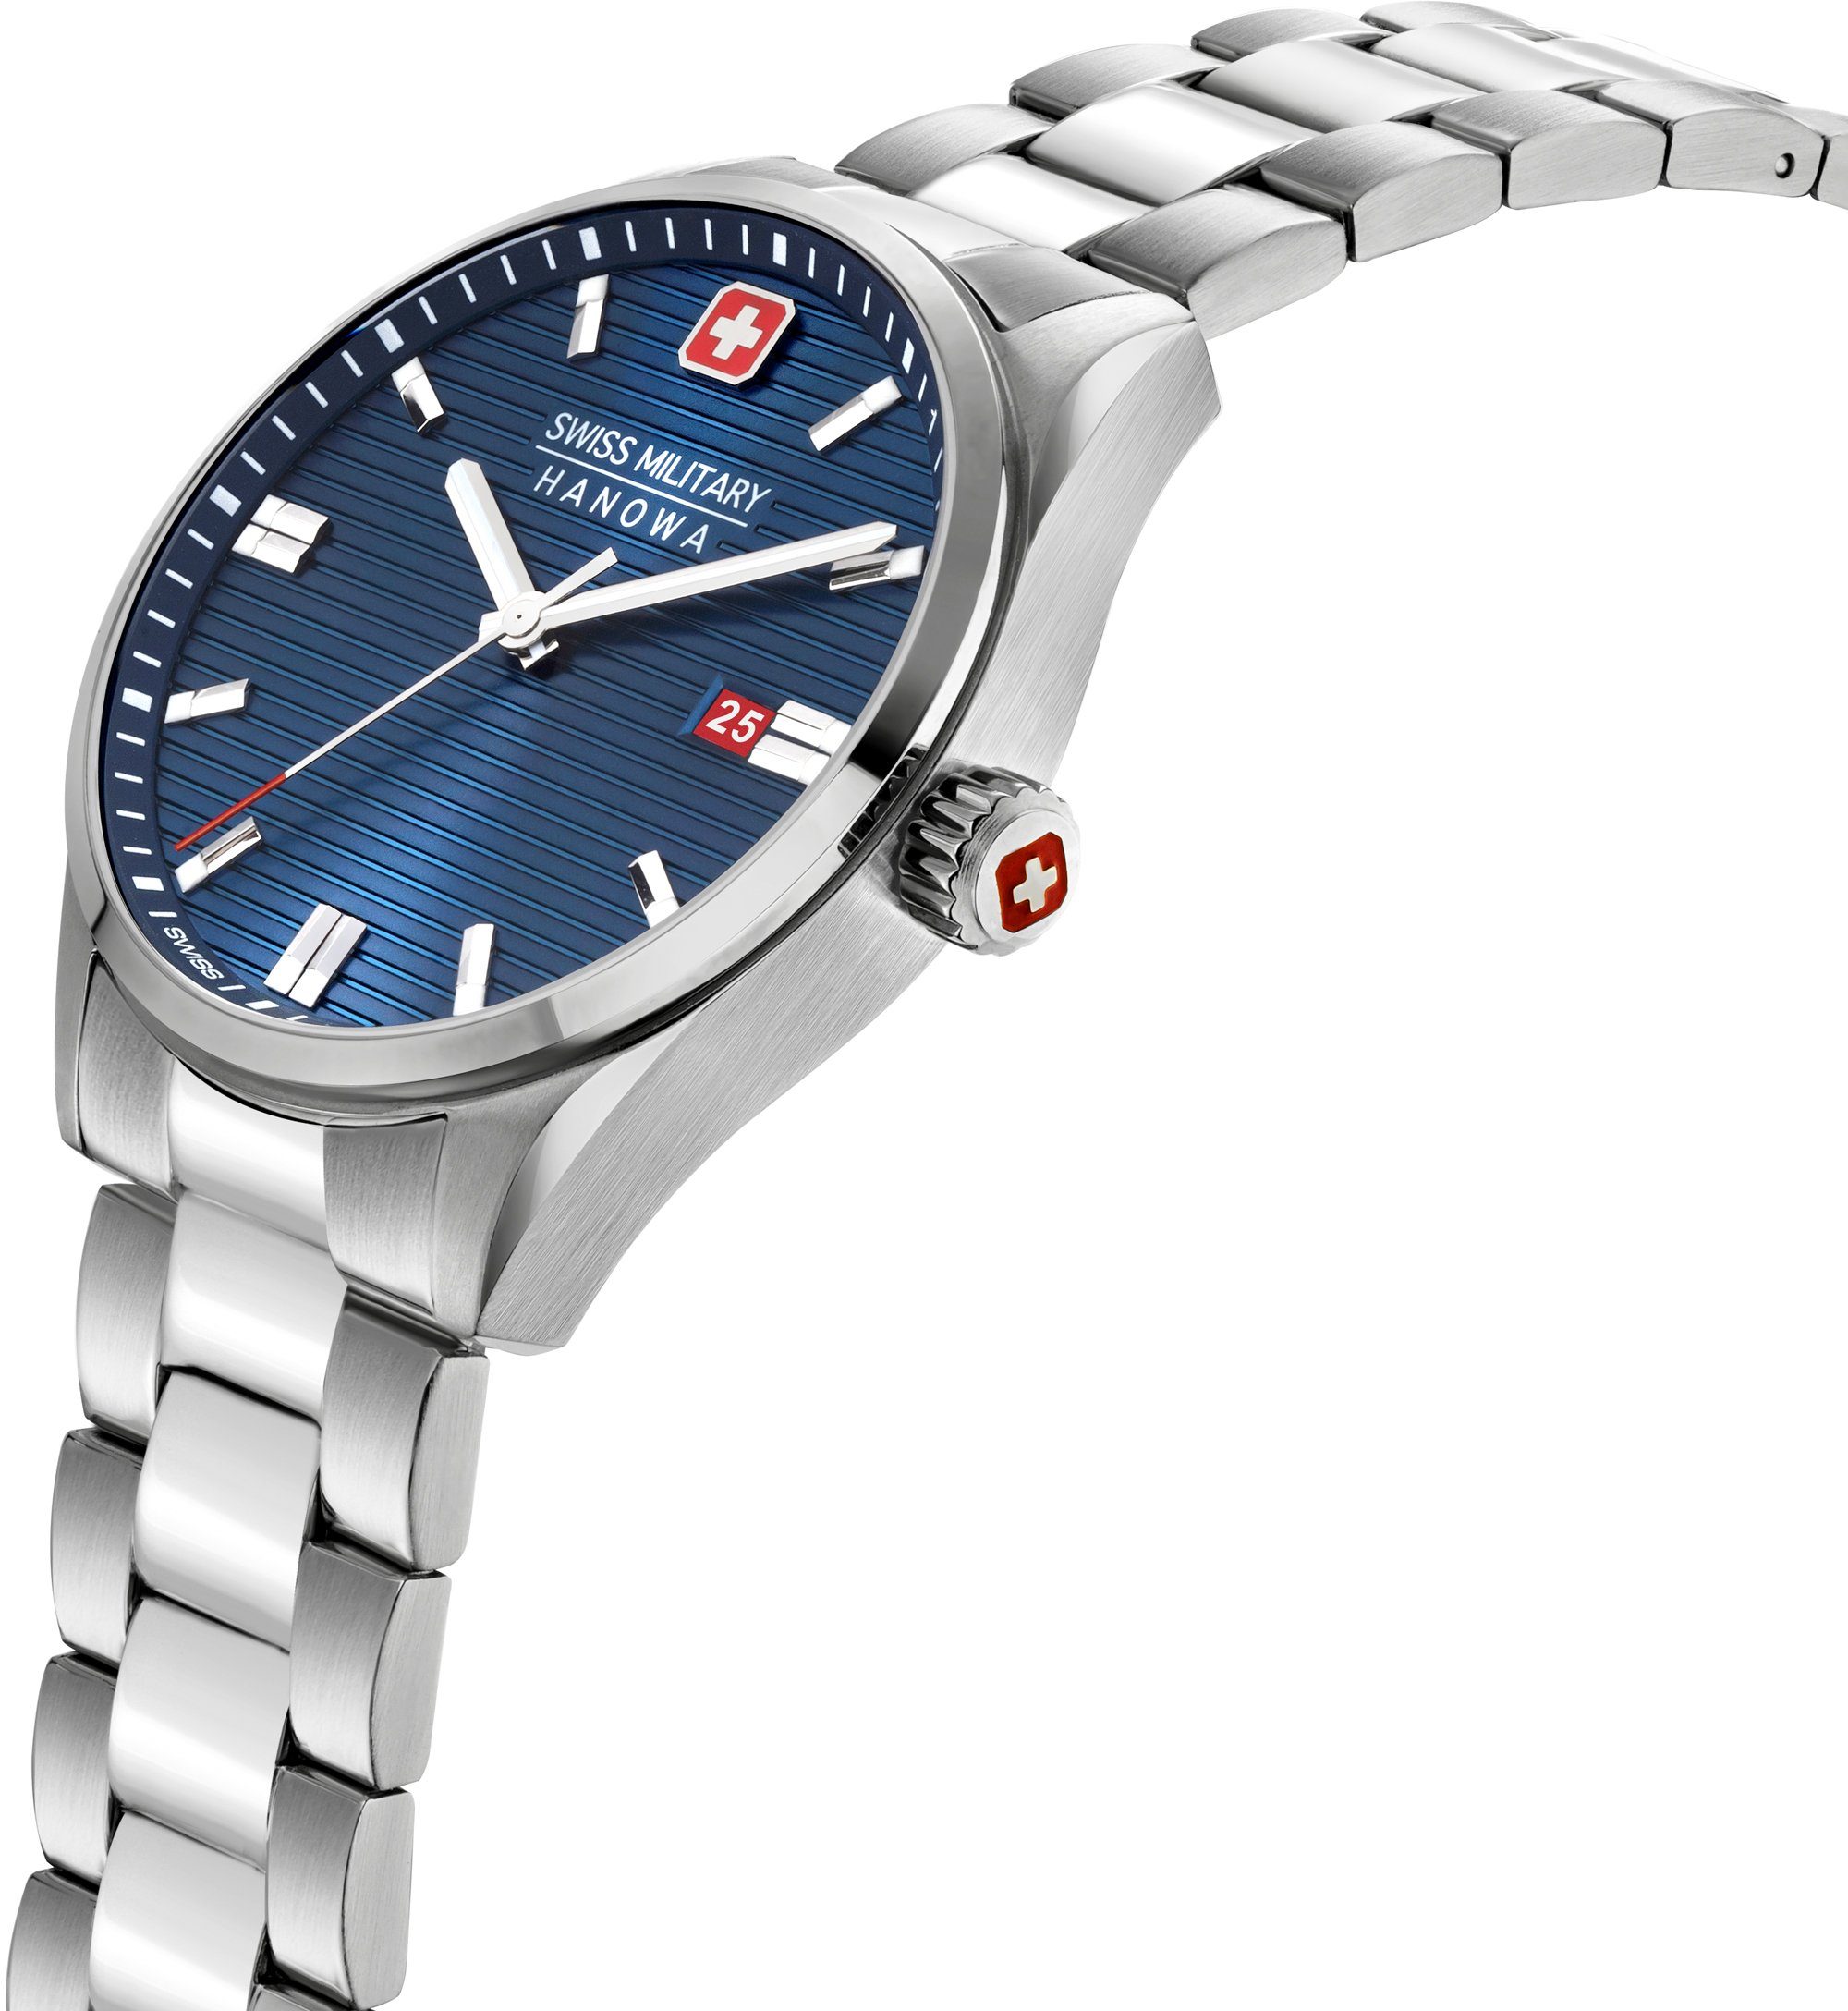 Swiss Military Hanowa Schweizer Uhr Blau SMWGH2200102 ROADRUNNER